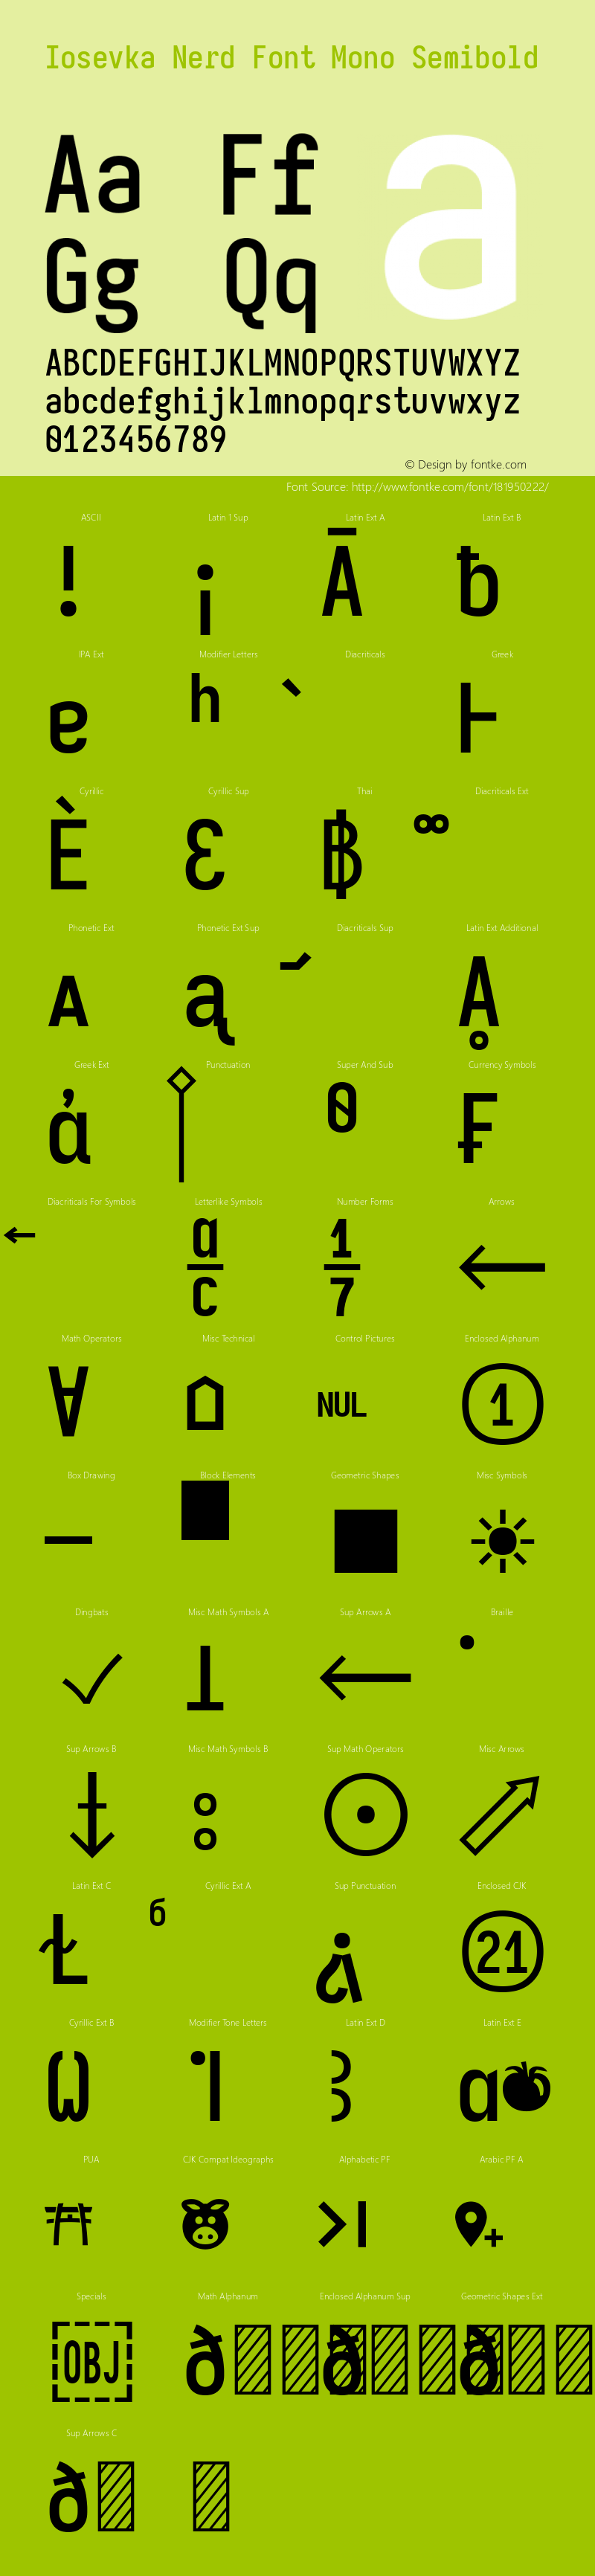 Iosevka Mayukai Codepro Semibold Nerd Font Complete Mono Version 10.3.4; ttfautohint (v1.8.4)图片样张